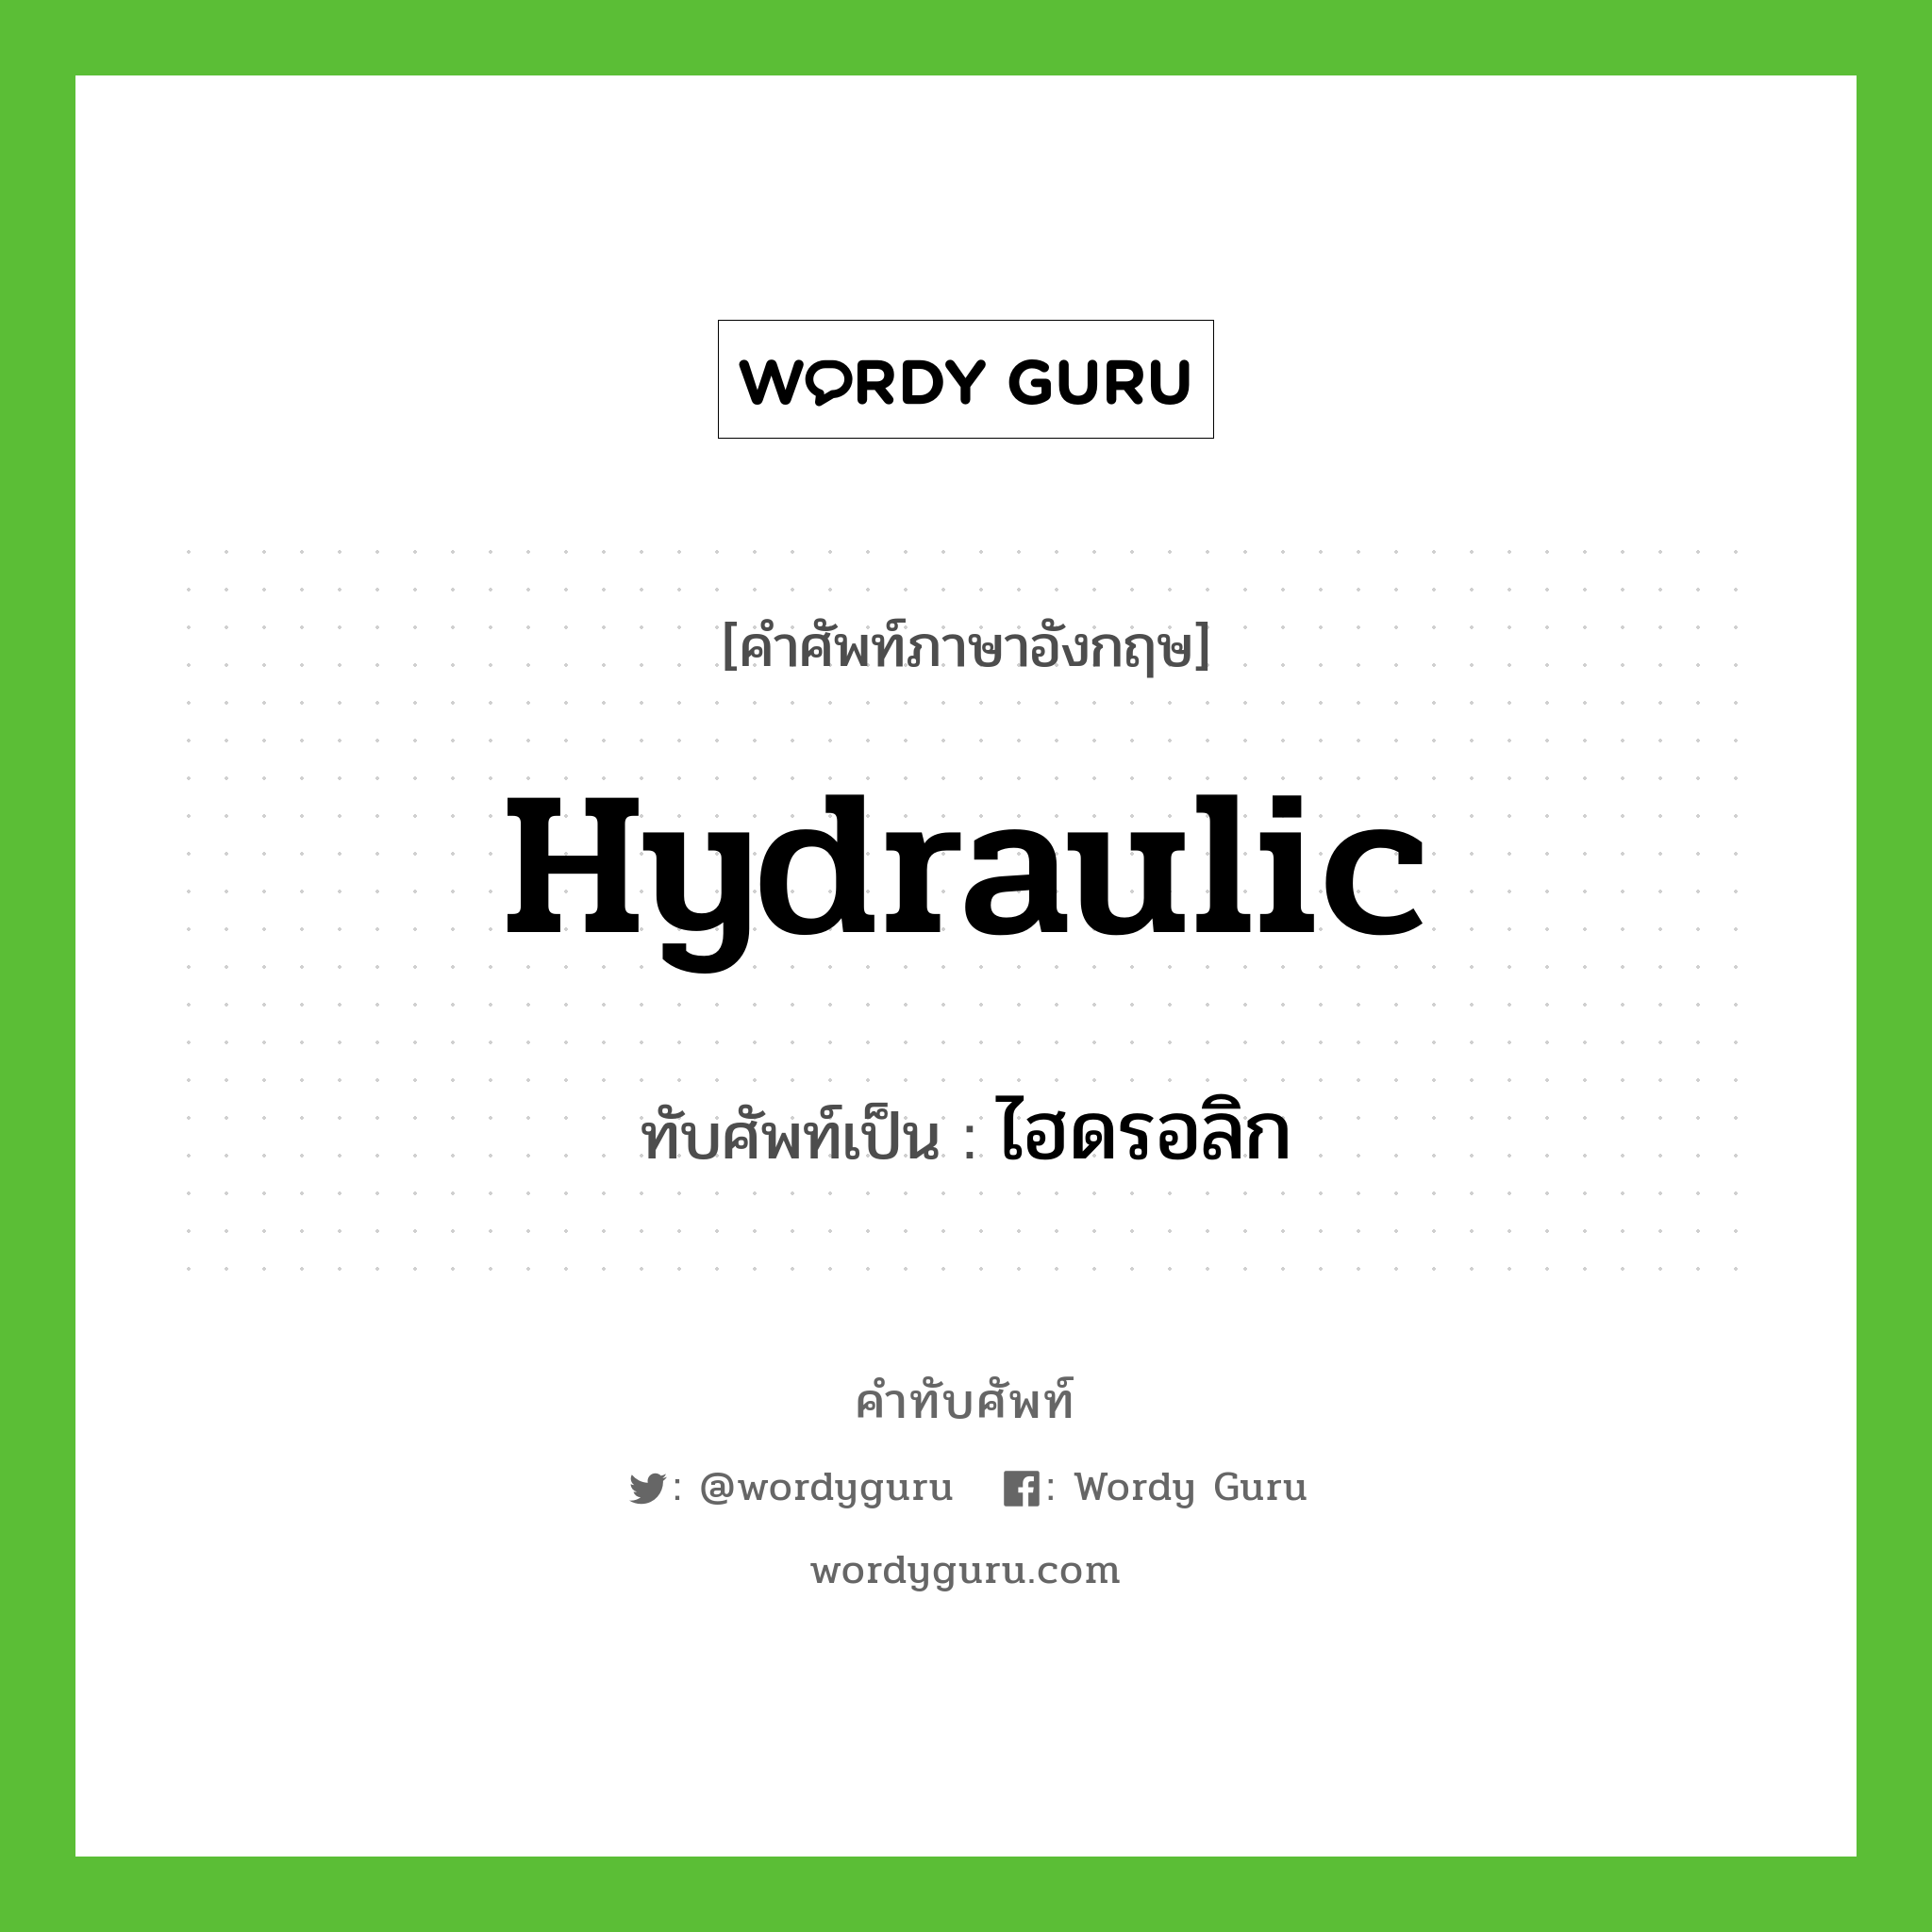 hydraulic เขียนเป็นคำไทยว่าอะไร?, คำศัพท์ภาษาอังกฤษ hydraulic ทับศัพท์เป็น ไฮดรอลิก